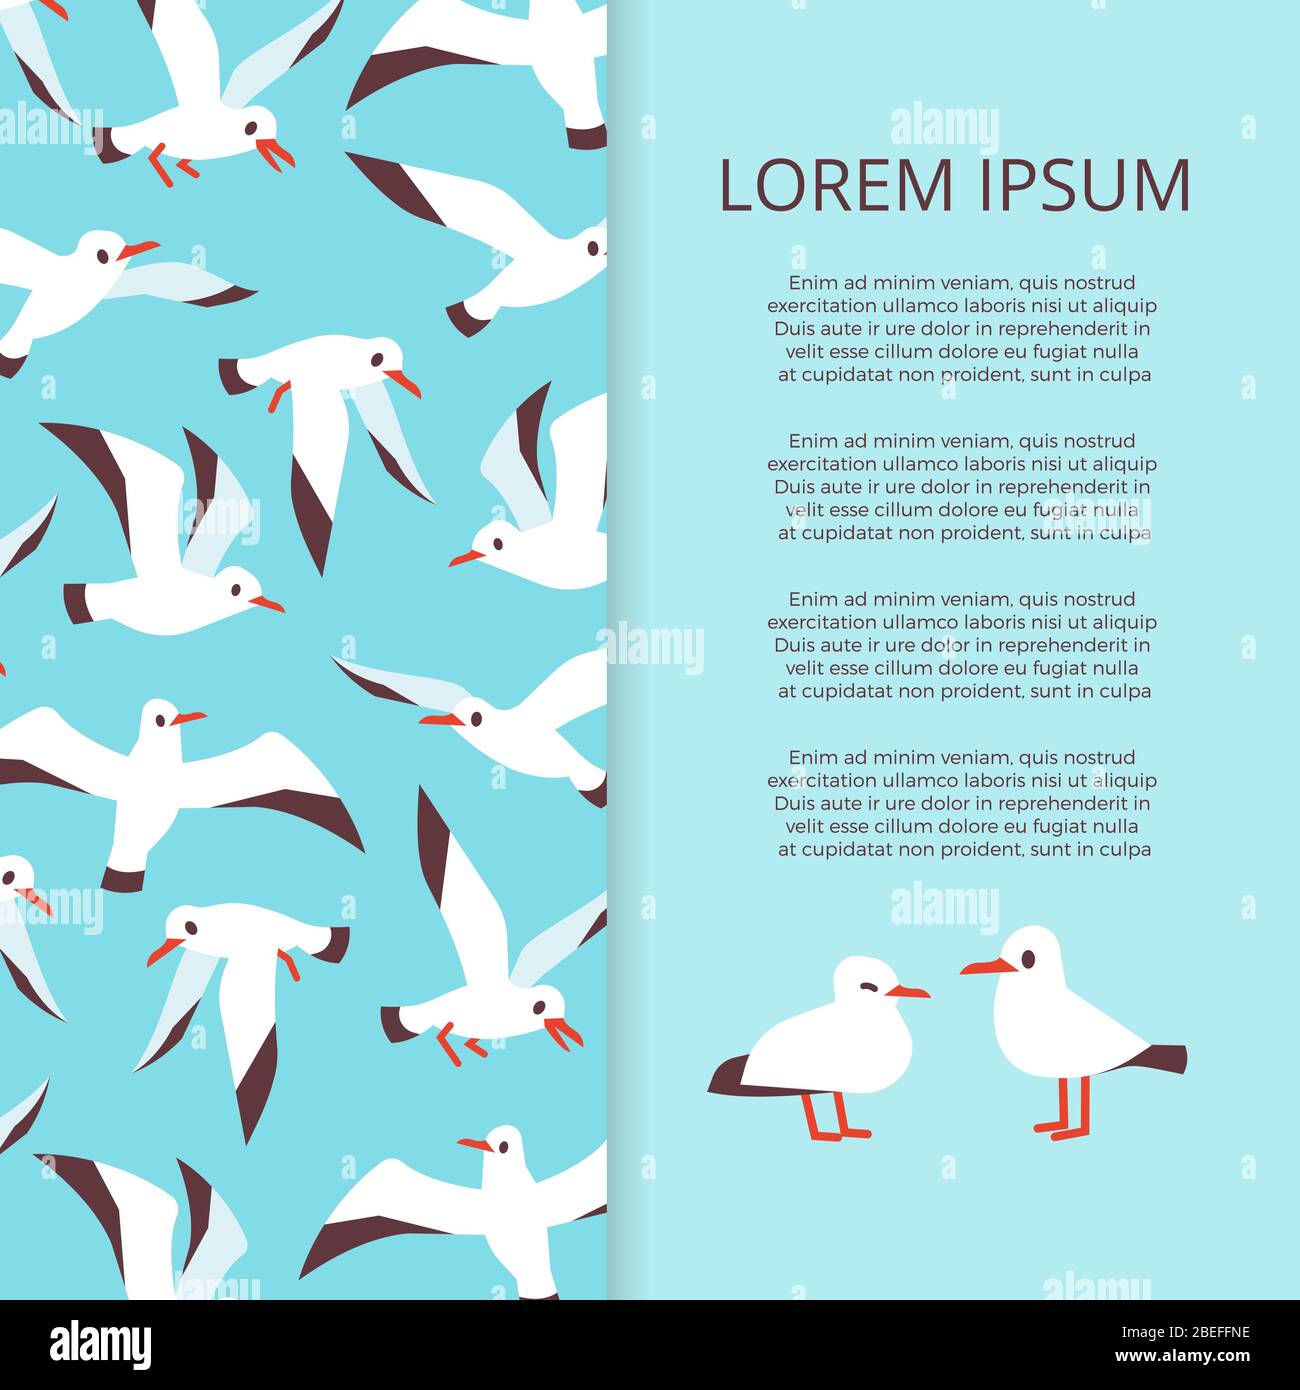 Flat seabirds banner template vector. Poster with birds illustration design Stock Vector